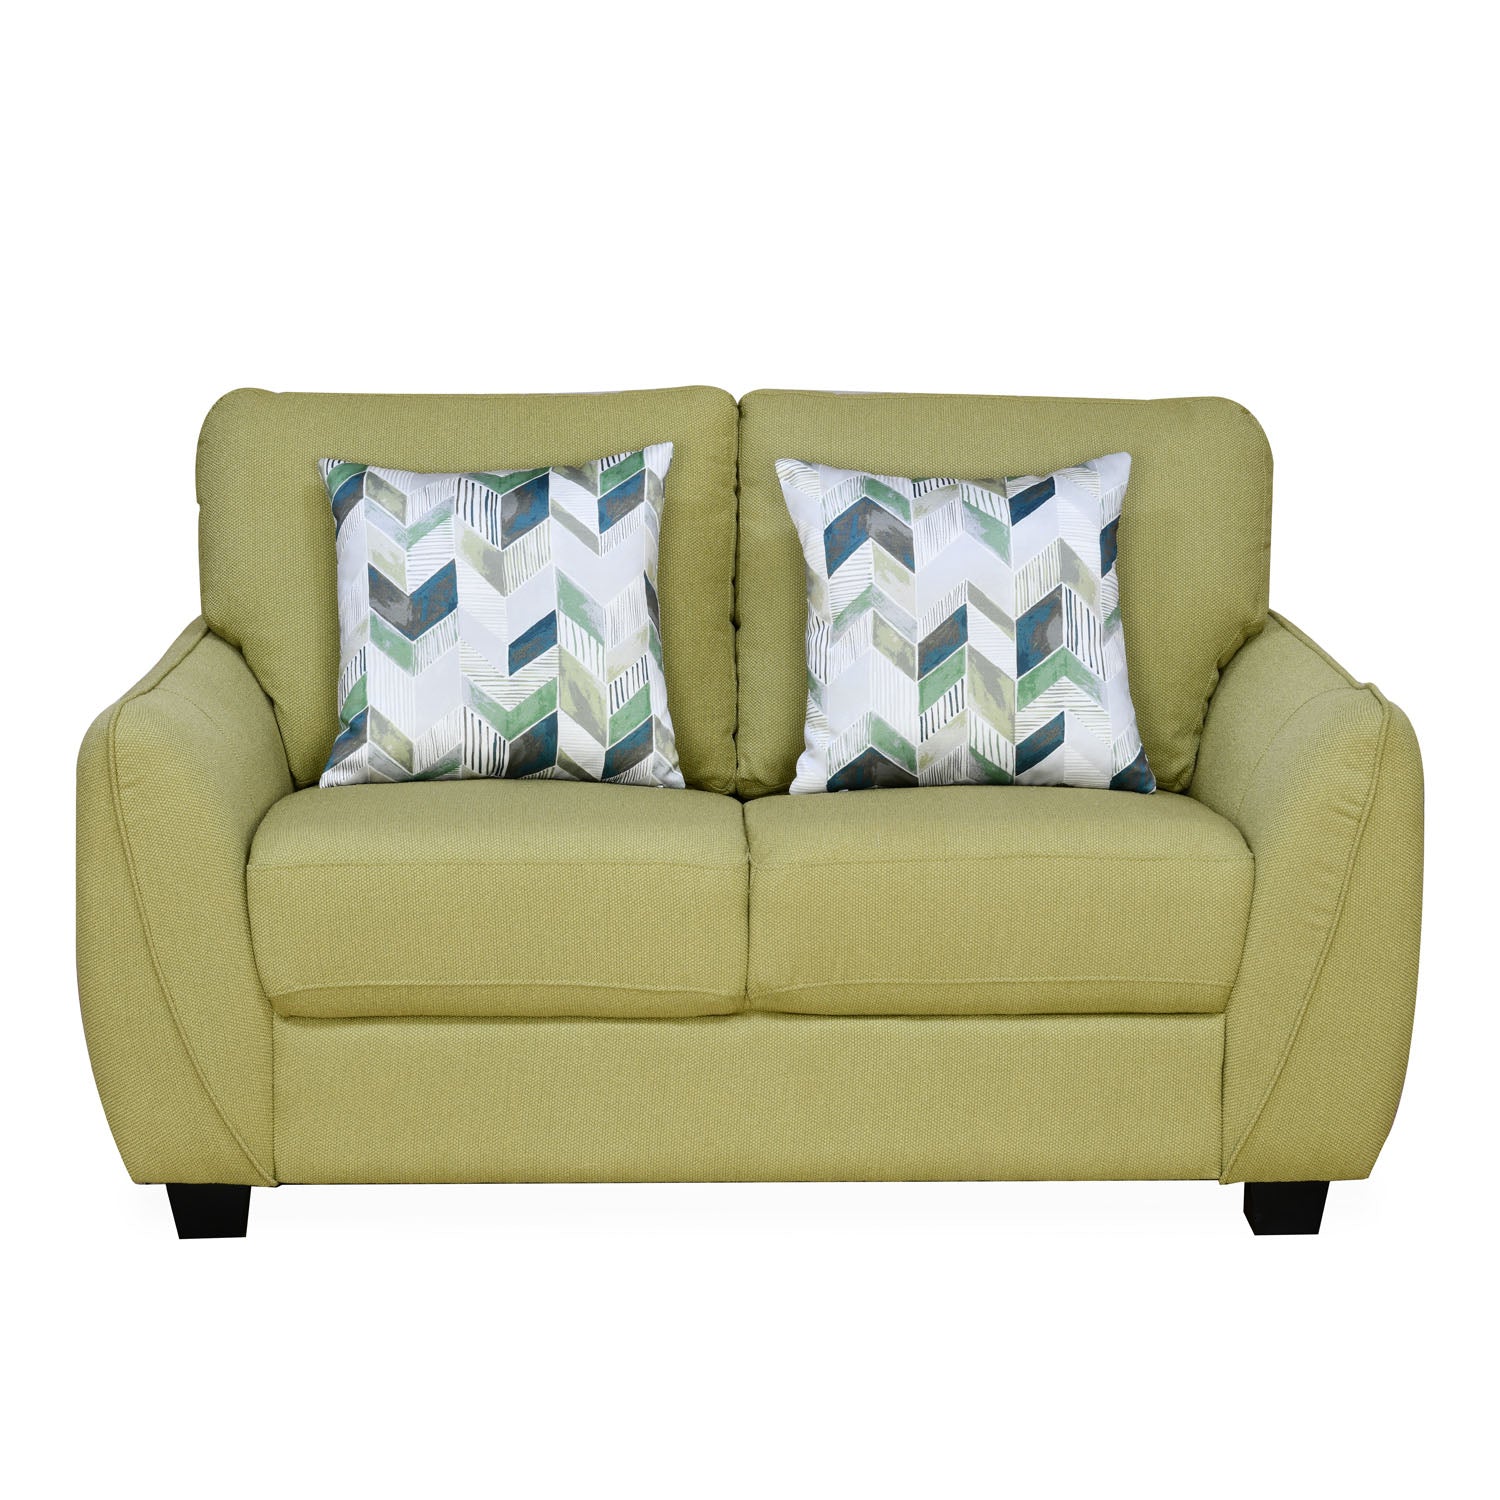 Springfield 2 Seater Fabric Sofa (Light Olive Green)